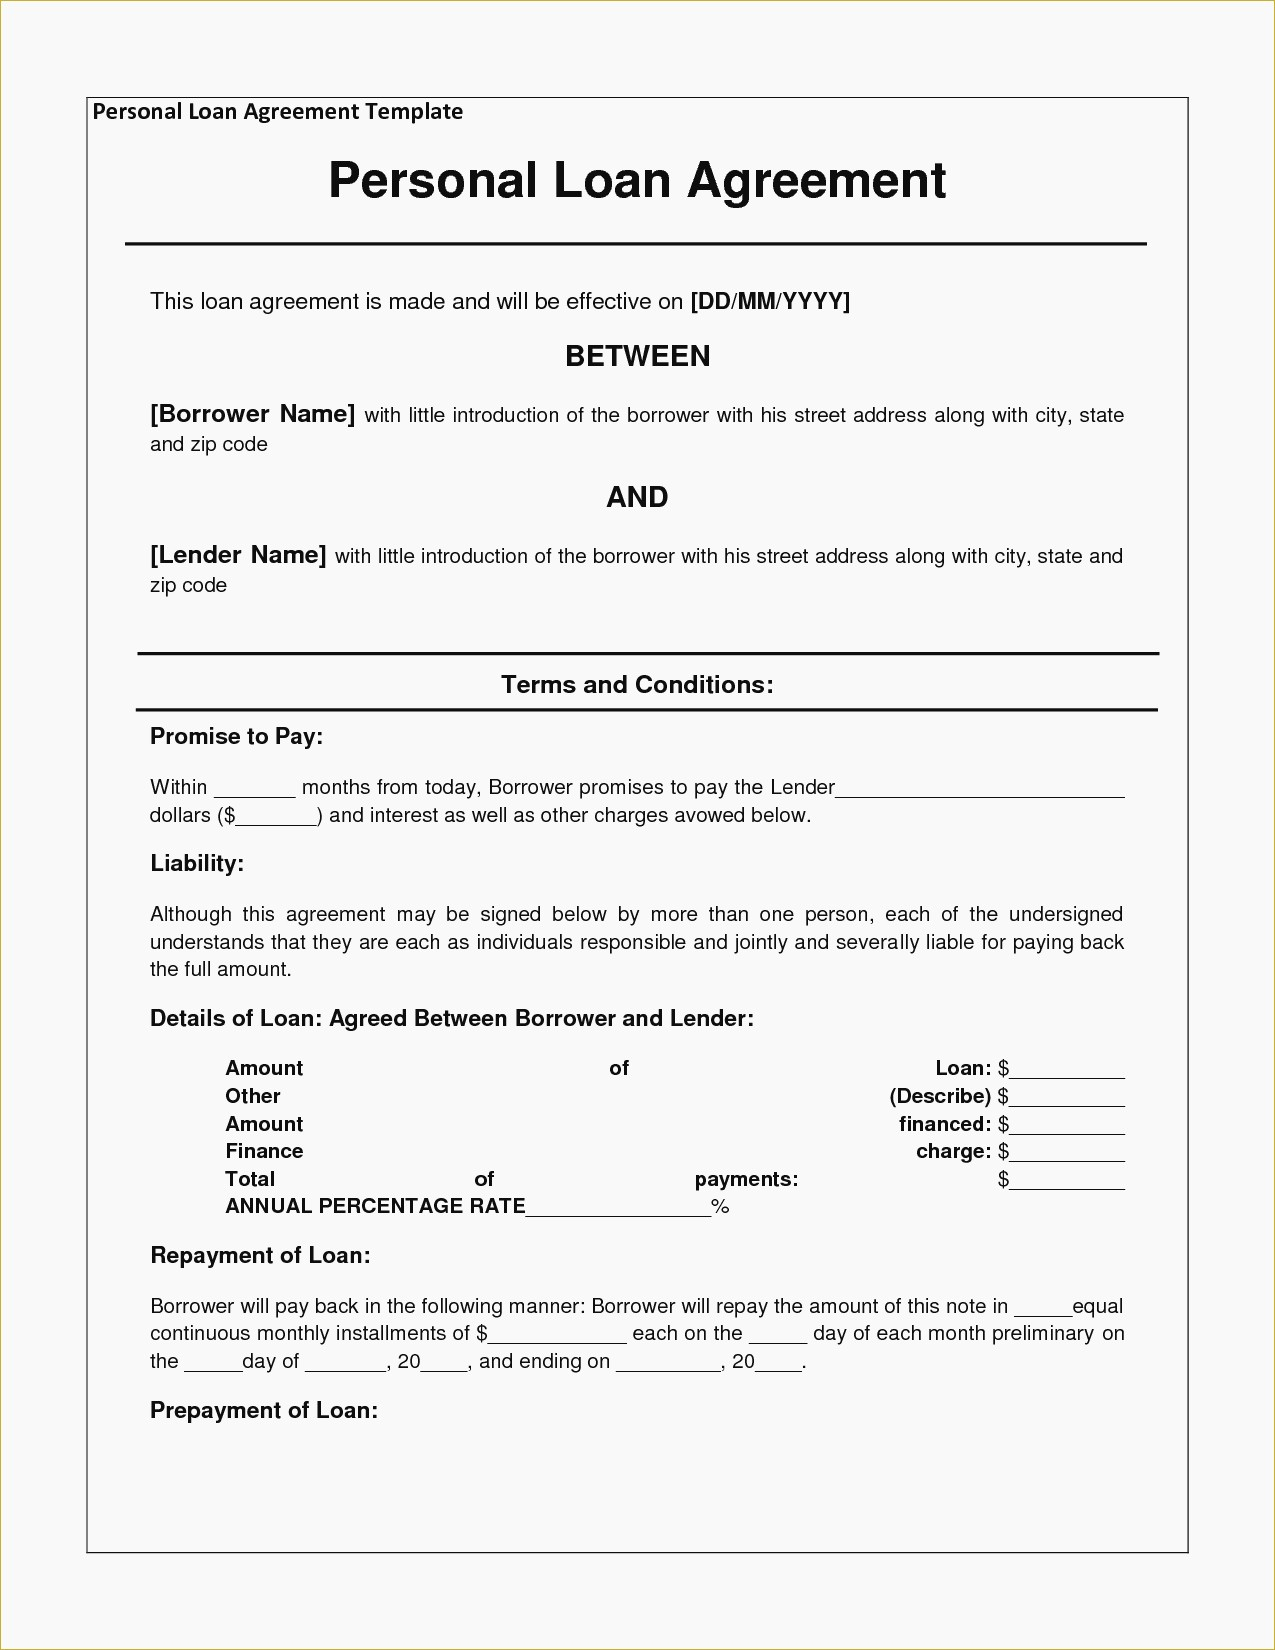 Free Legal Forms Online Printable | Sample Documents For Free Legal - Free Legal Forms Online Printable